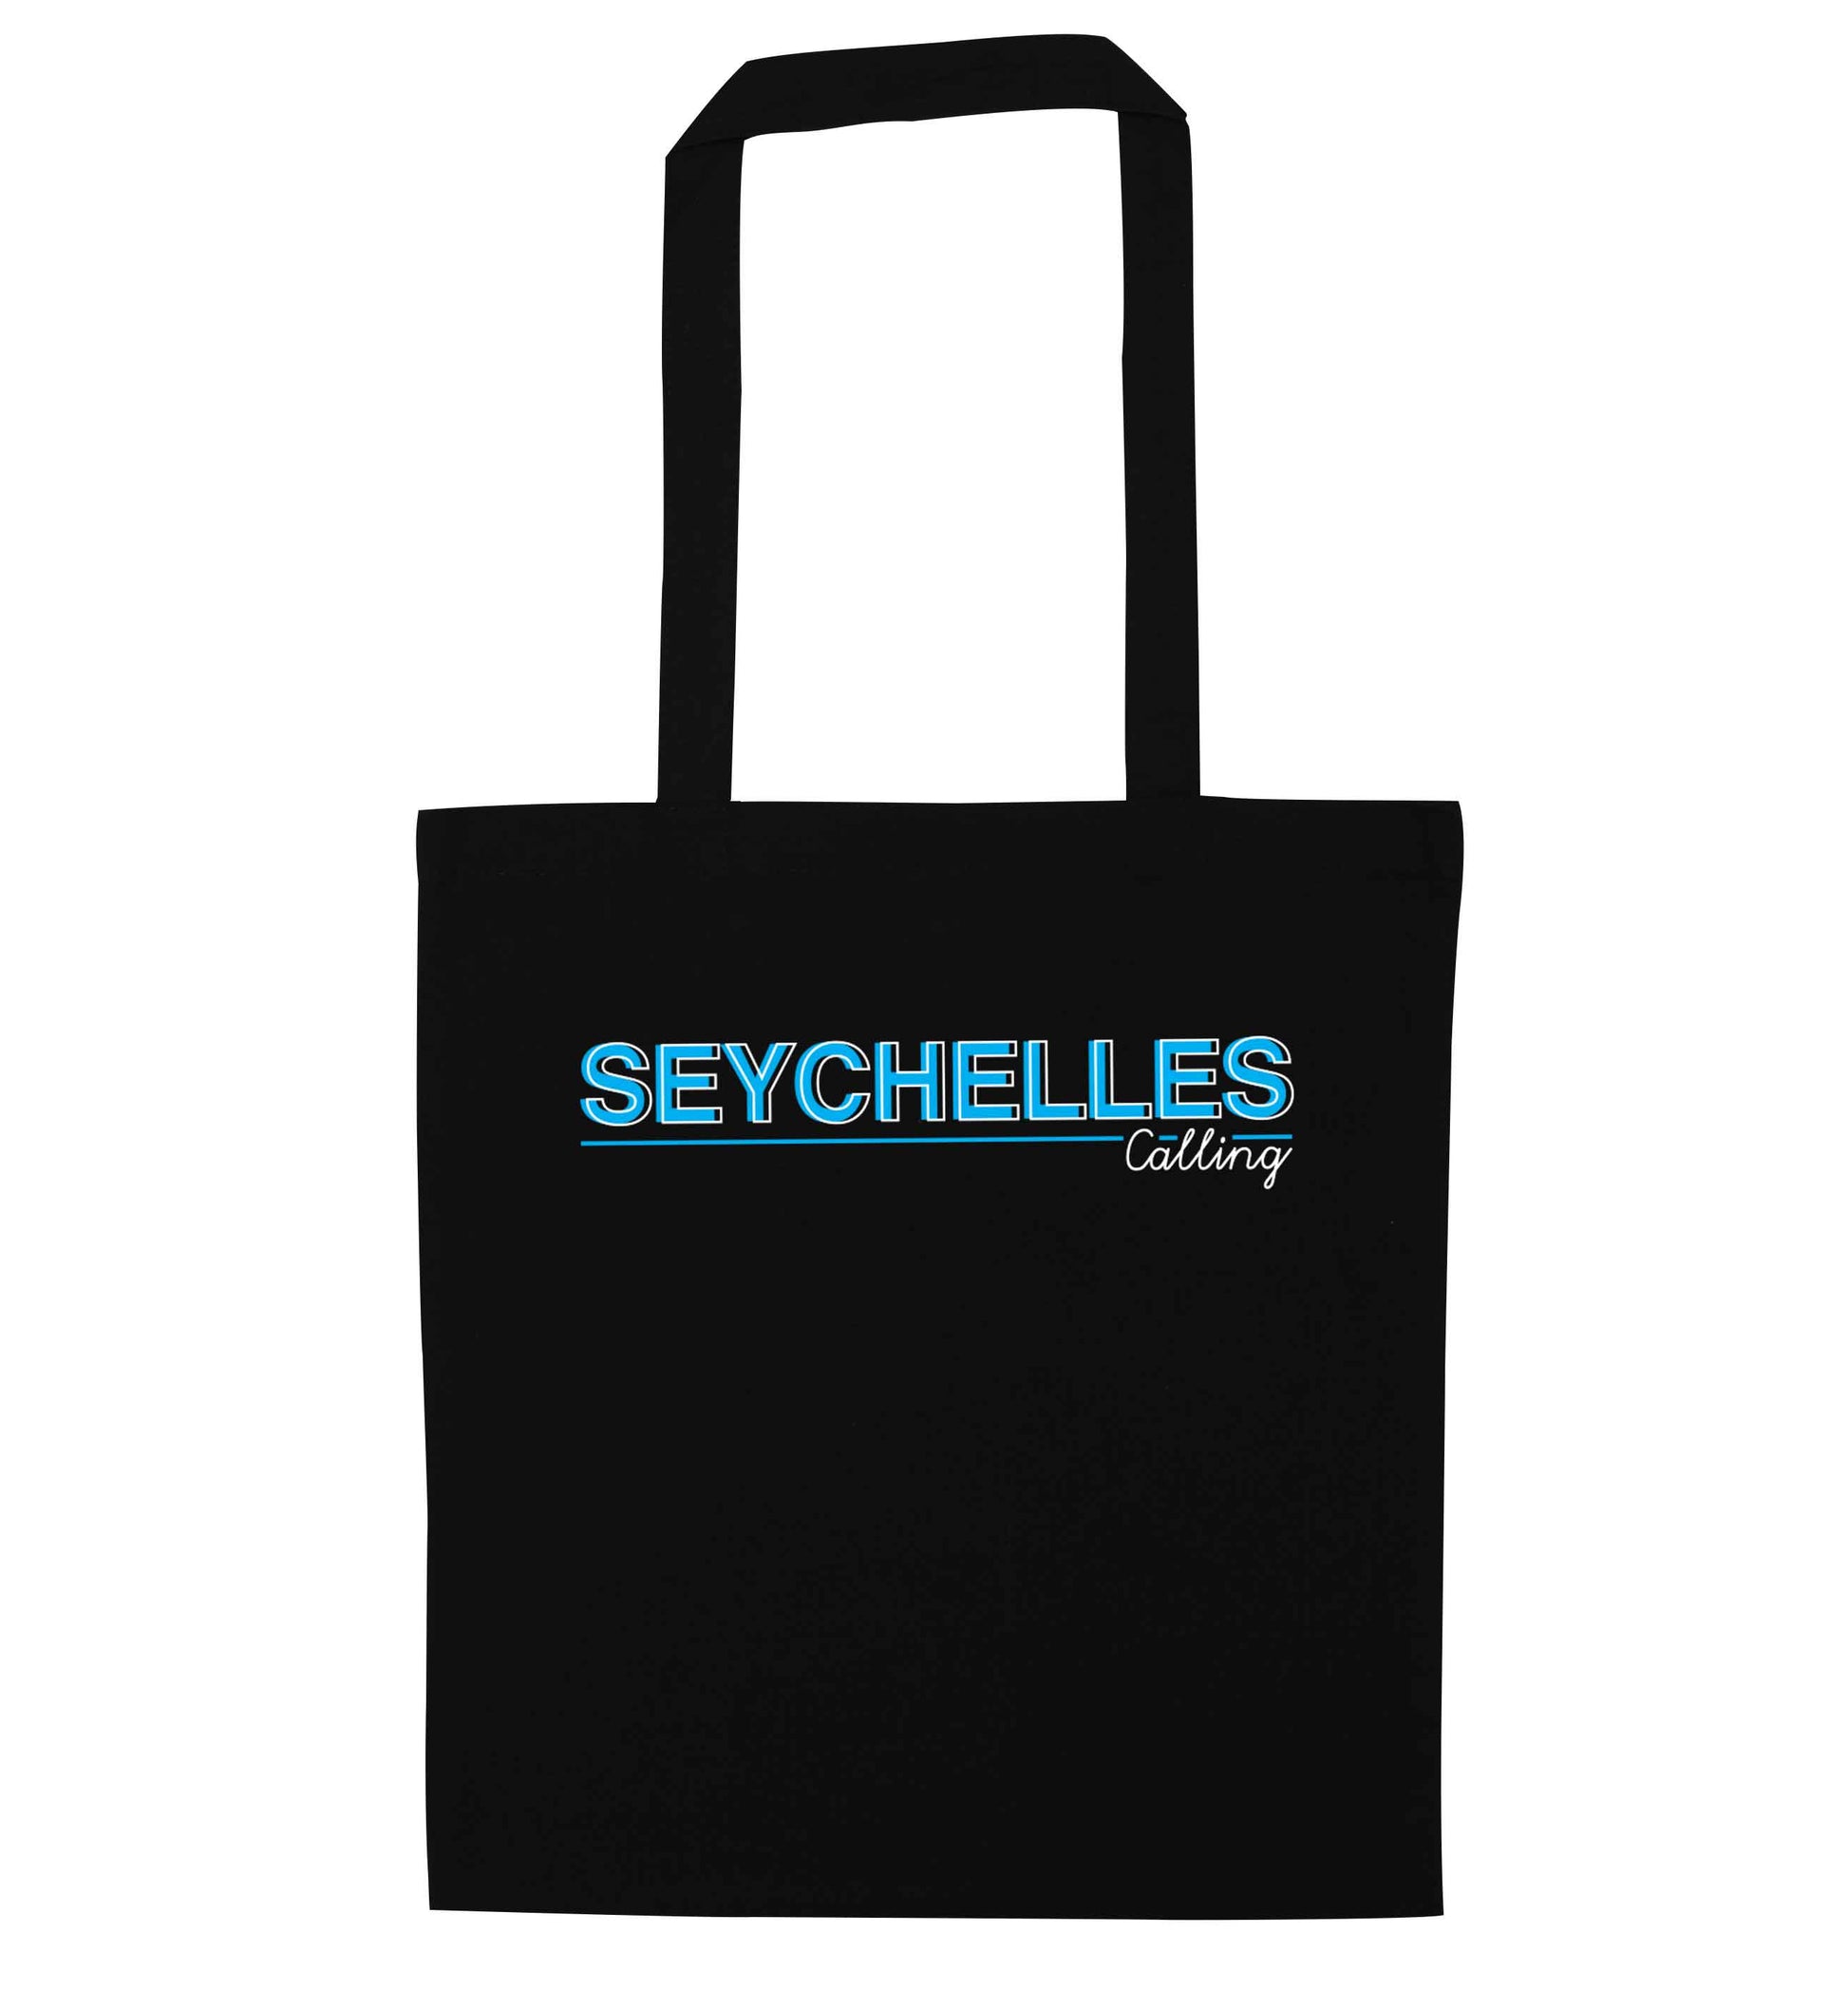 Seychelles calling black tote bag